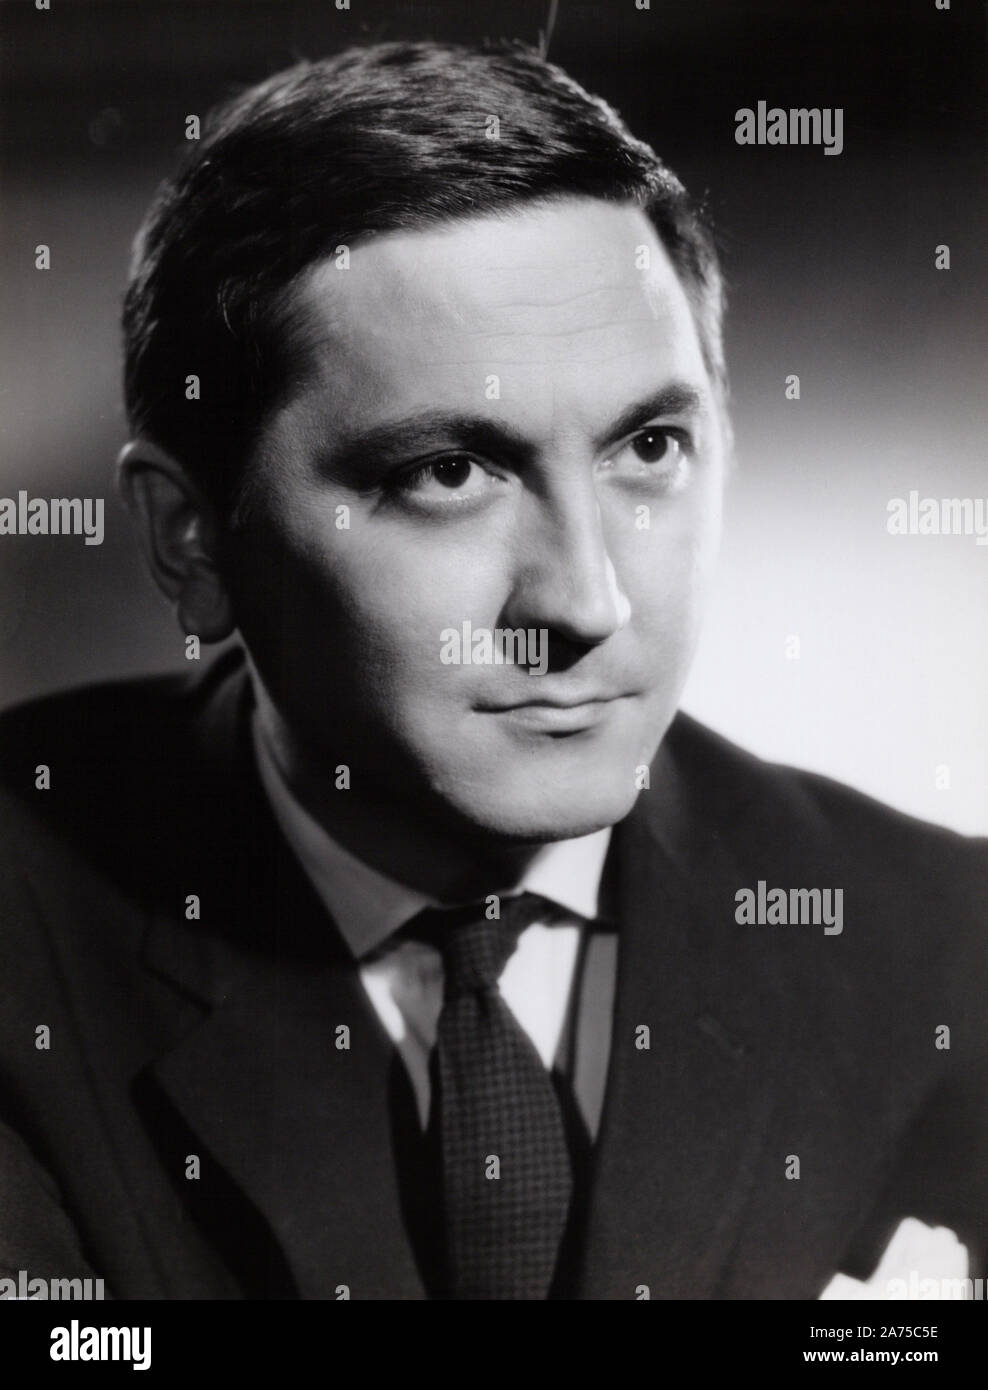 Robert Graf, deutscher Schauspieler, Deutschland ca. 1960. German actor Robert Graf, Germany ca. 1960. Stock Photo